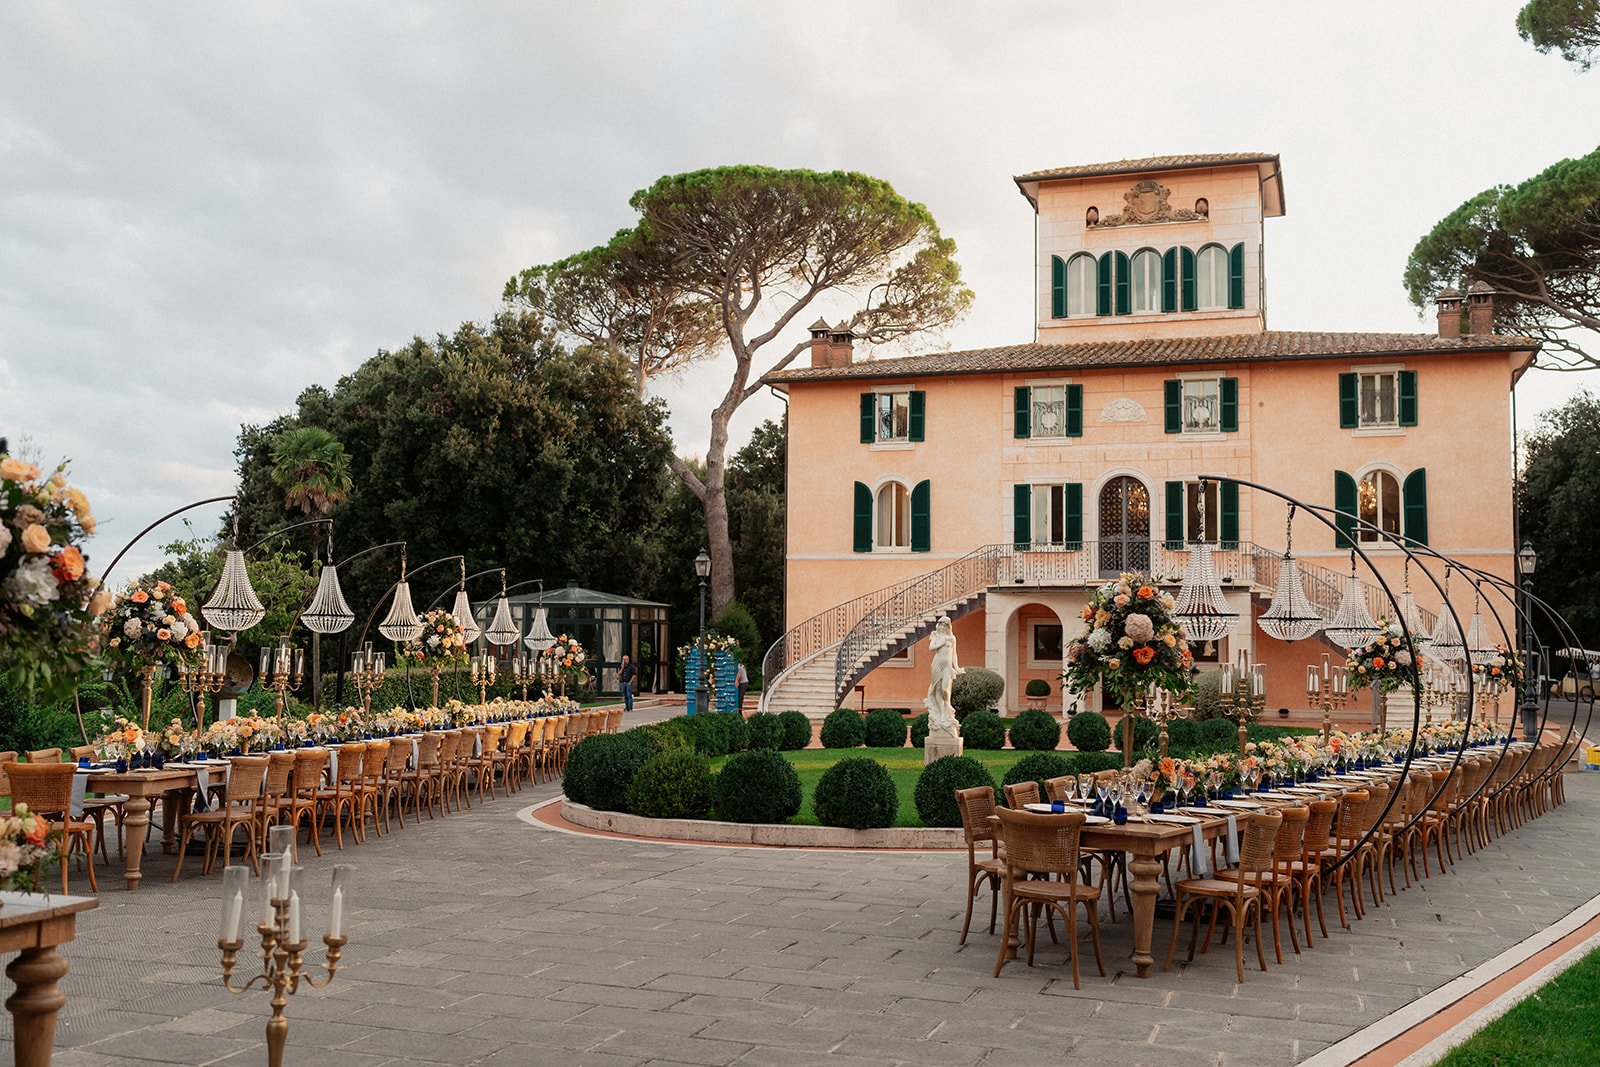 John_Pete_Luxury wedding reception in Tuscany.jpg